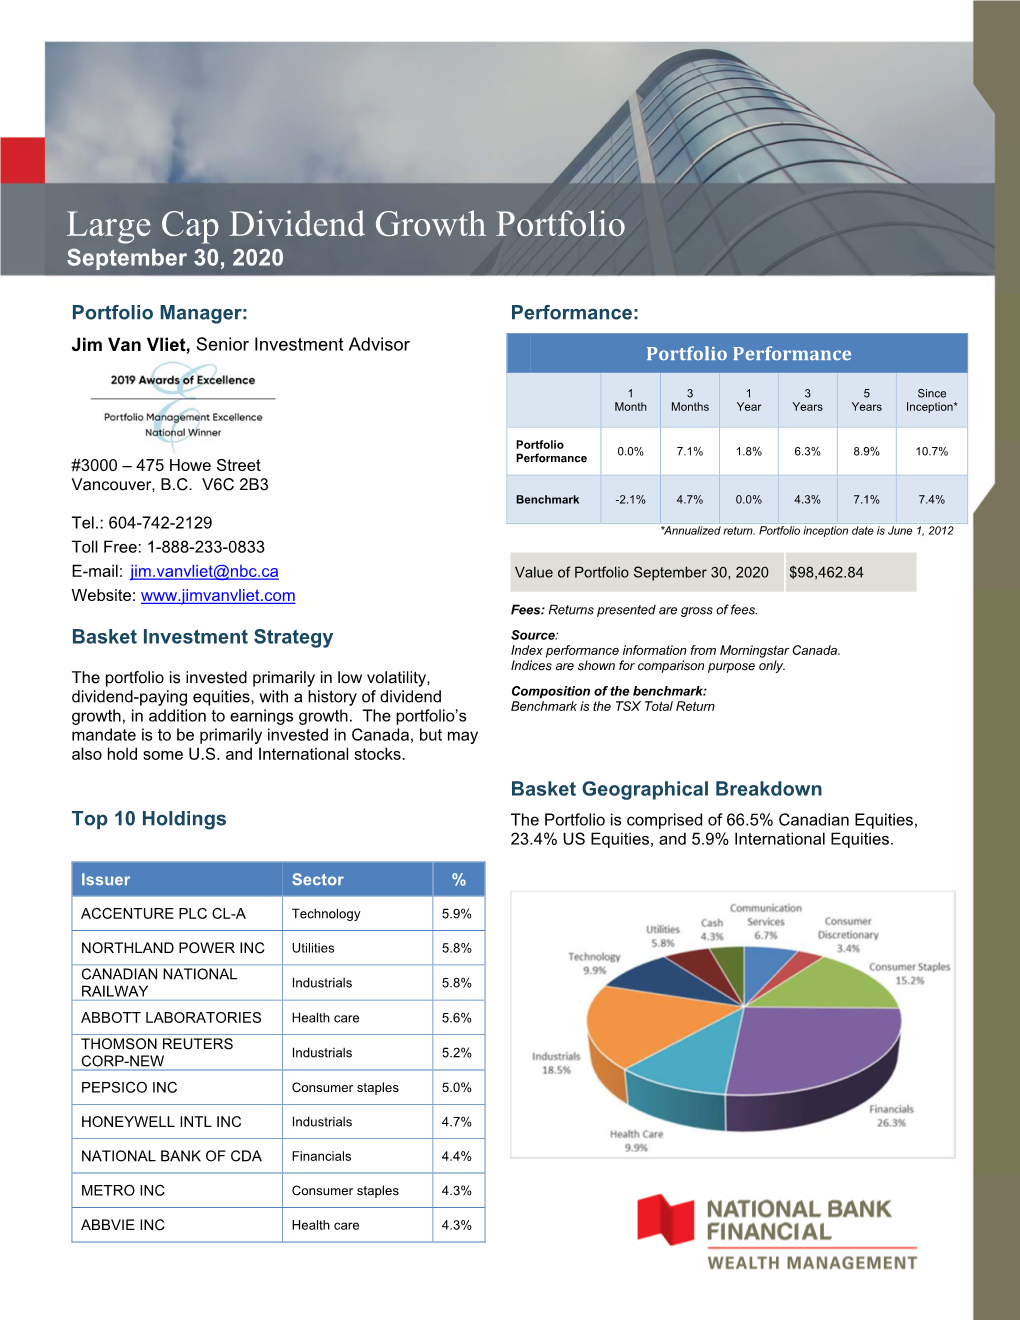 Large Cap Dividend Growth Portfolio September 30, 2020